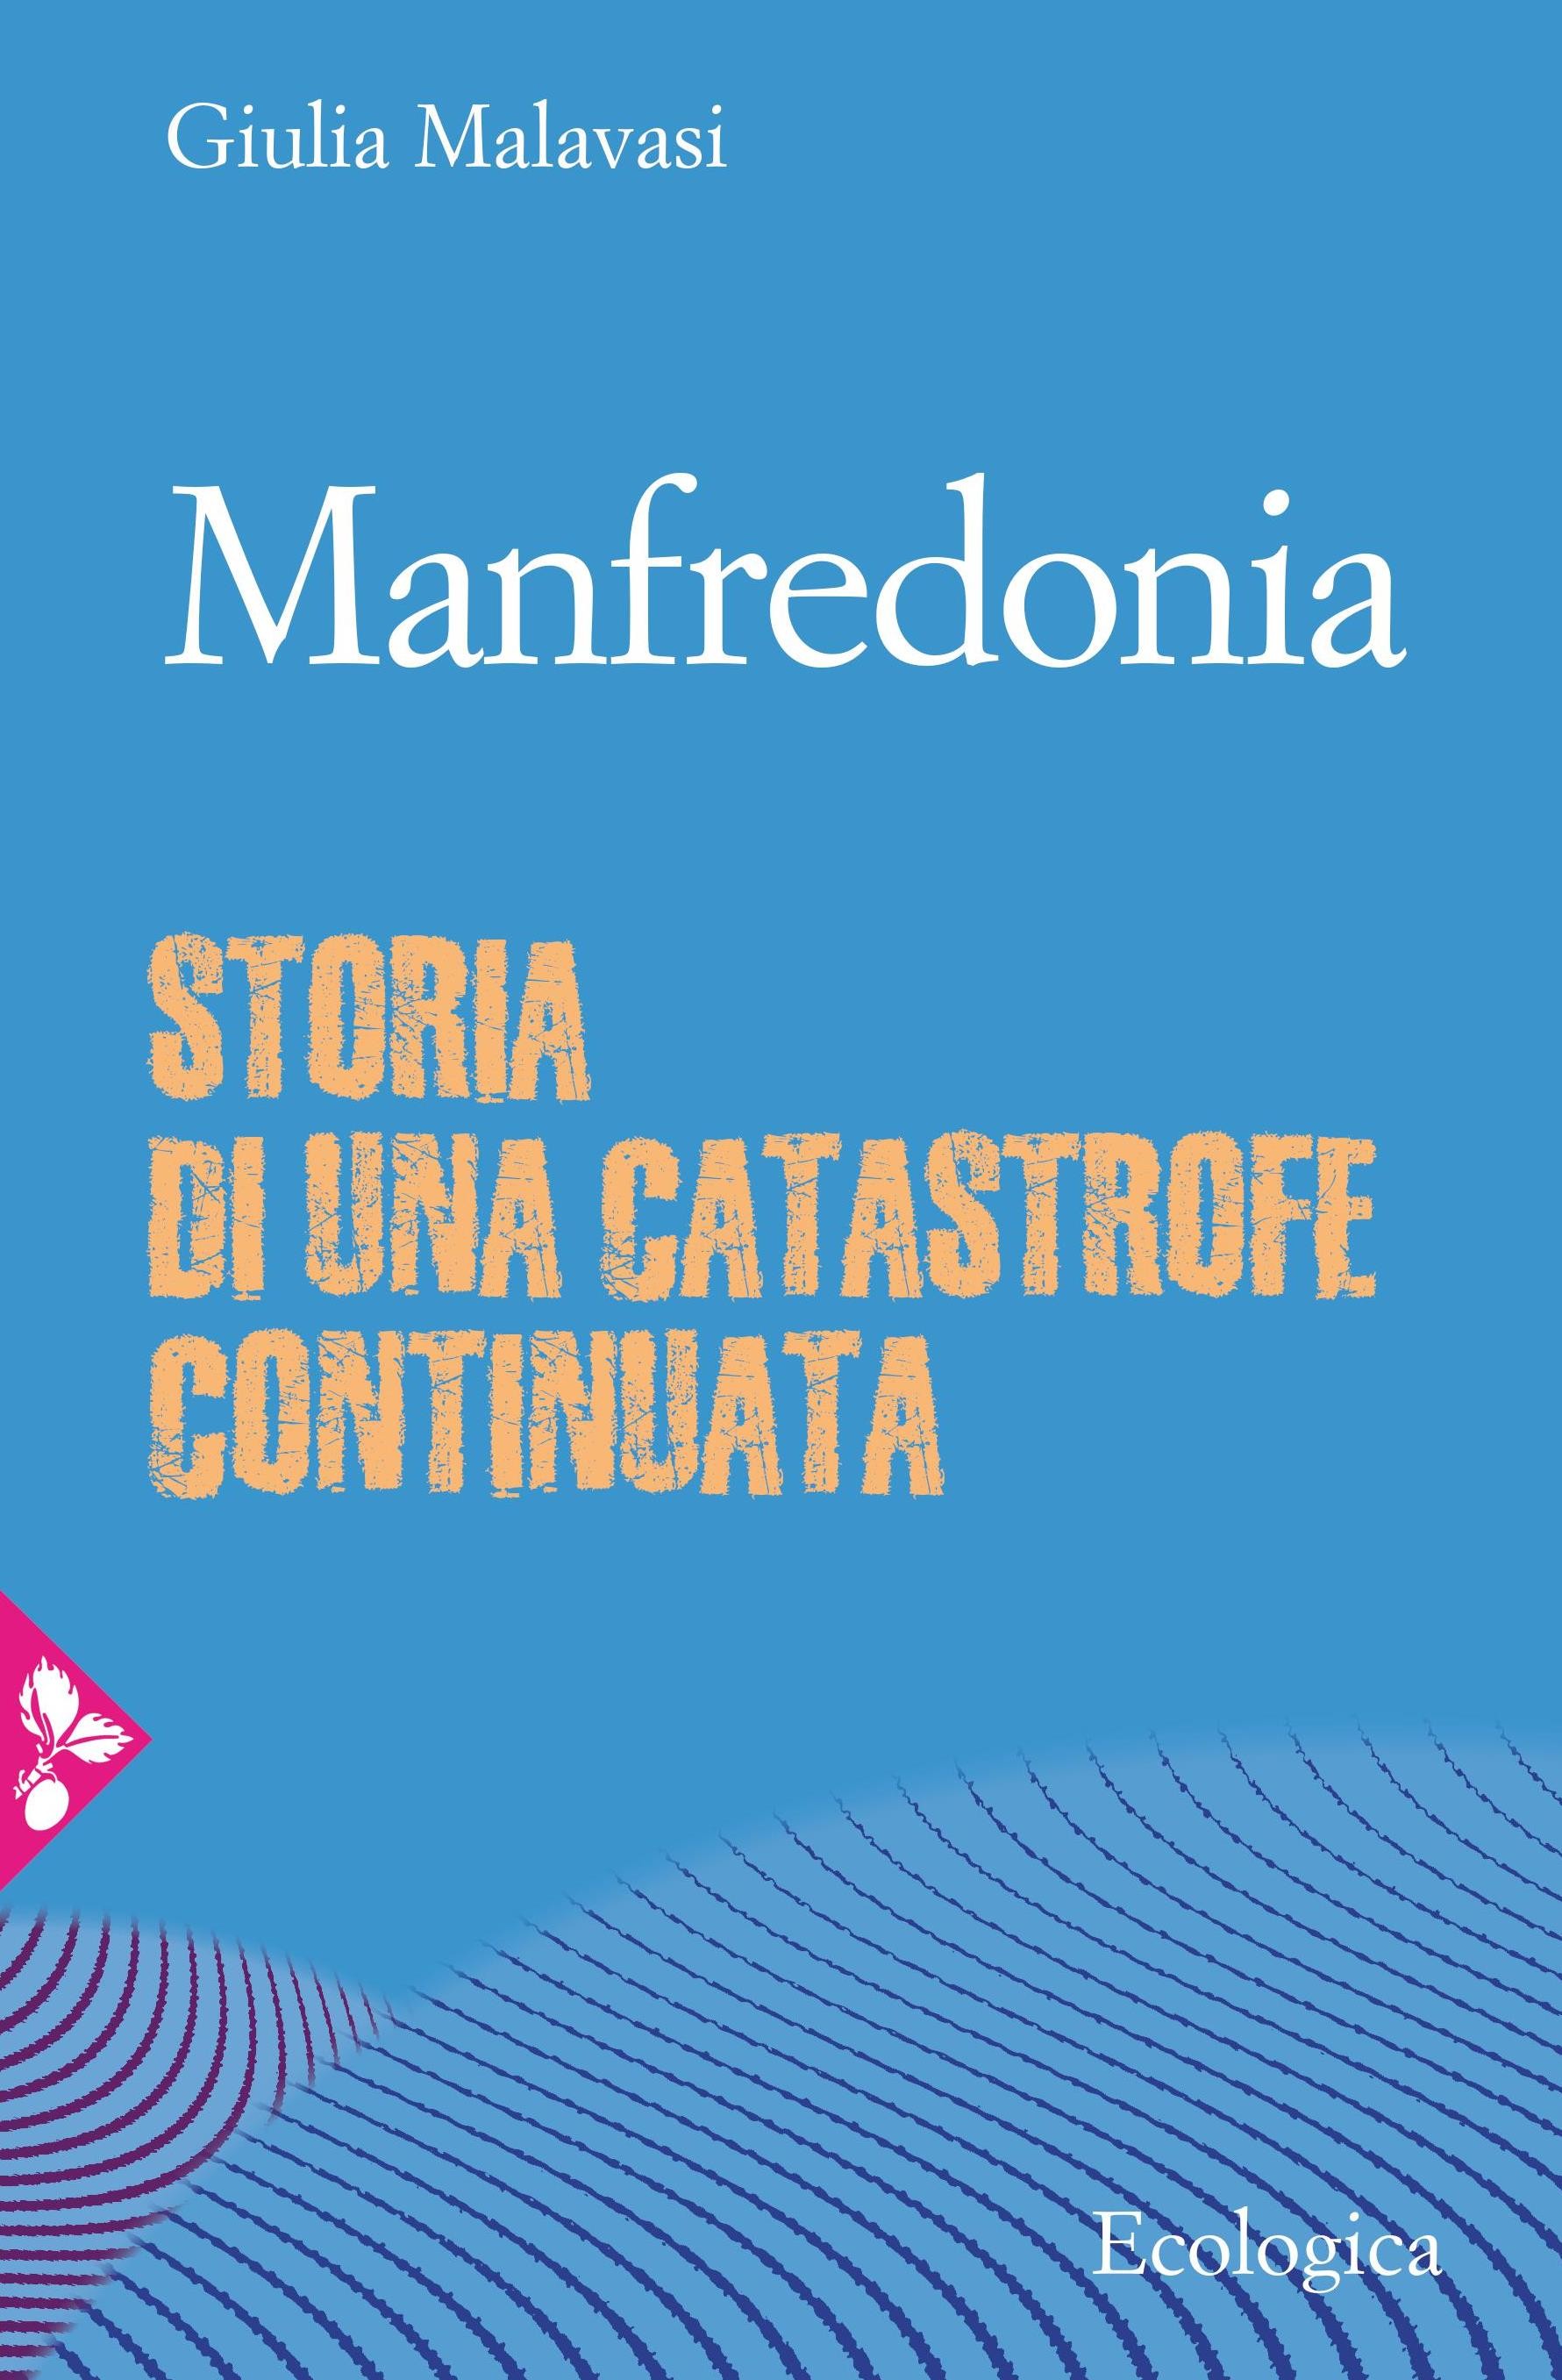 Manfredonia - Librerie.coop